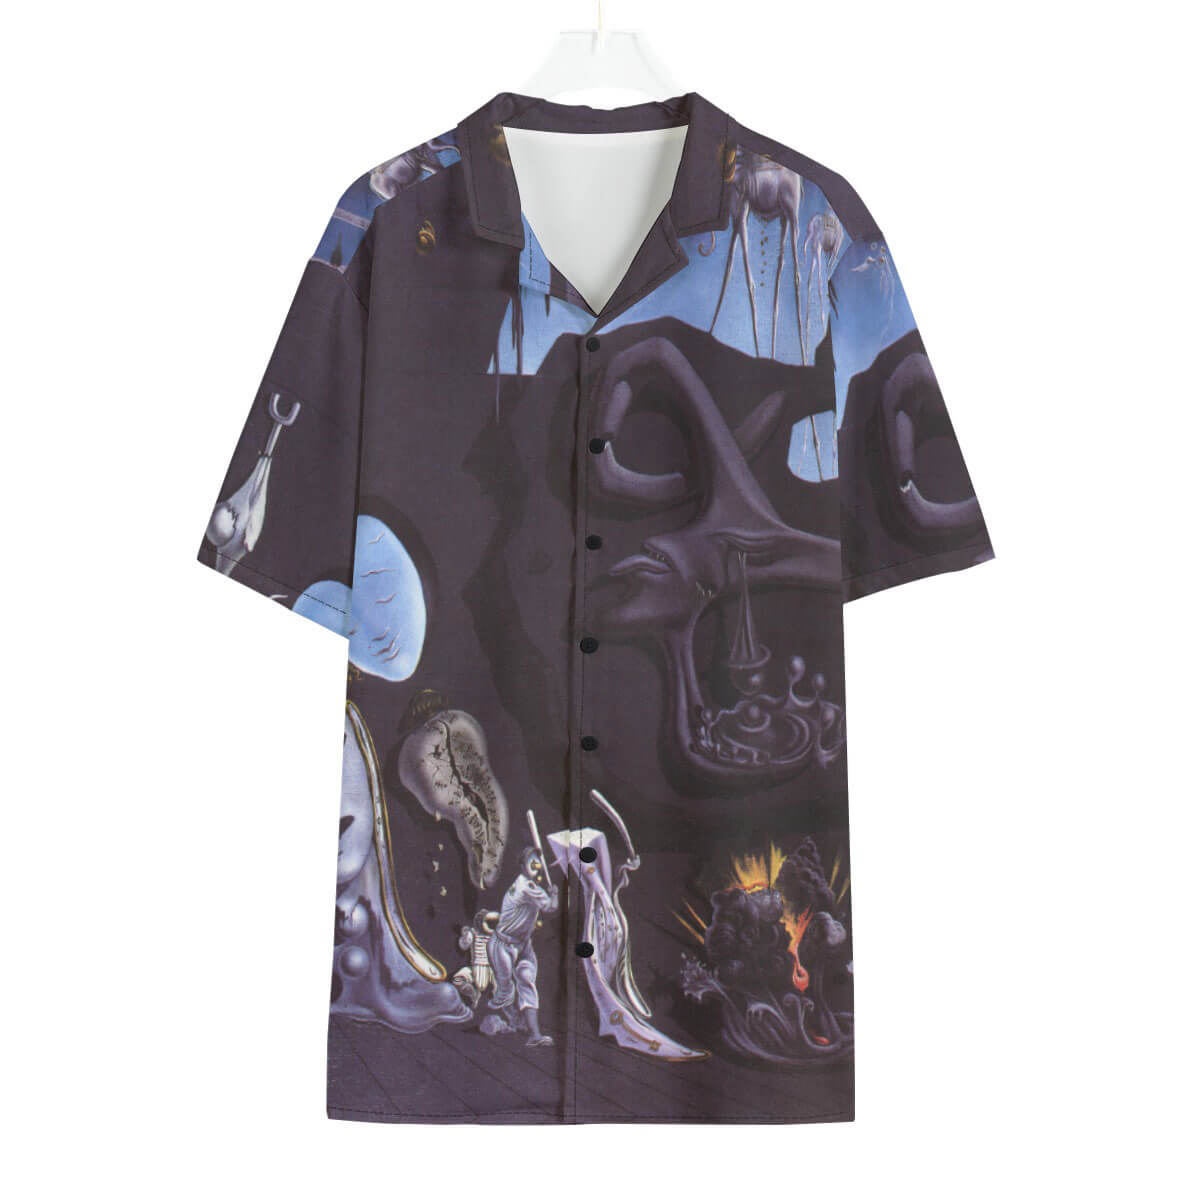 Melancholy Atomic Salvador Dali Hawaiian shirt featuring melting clocks